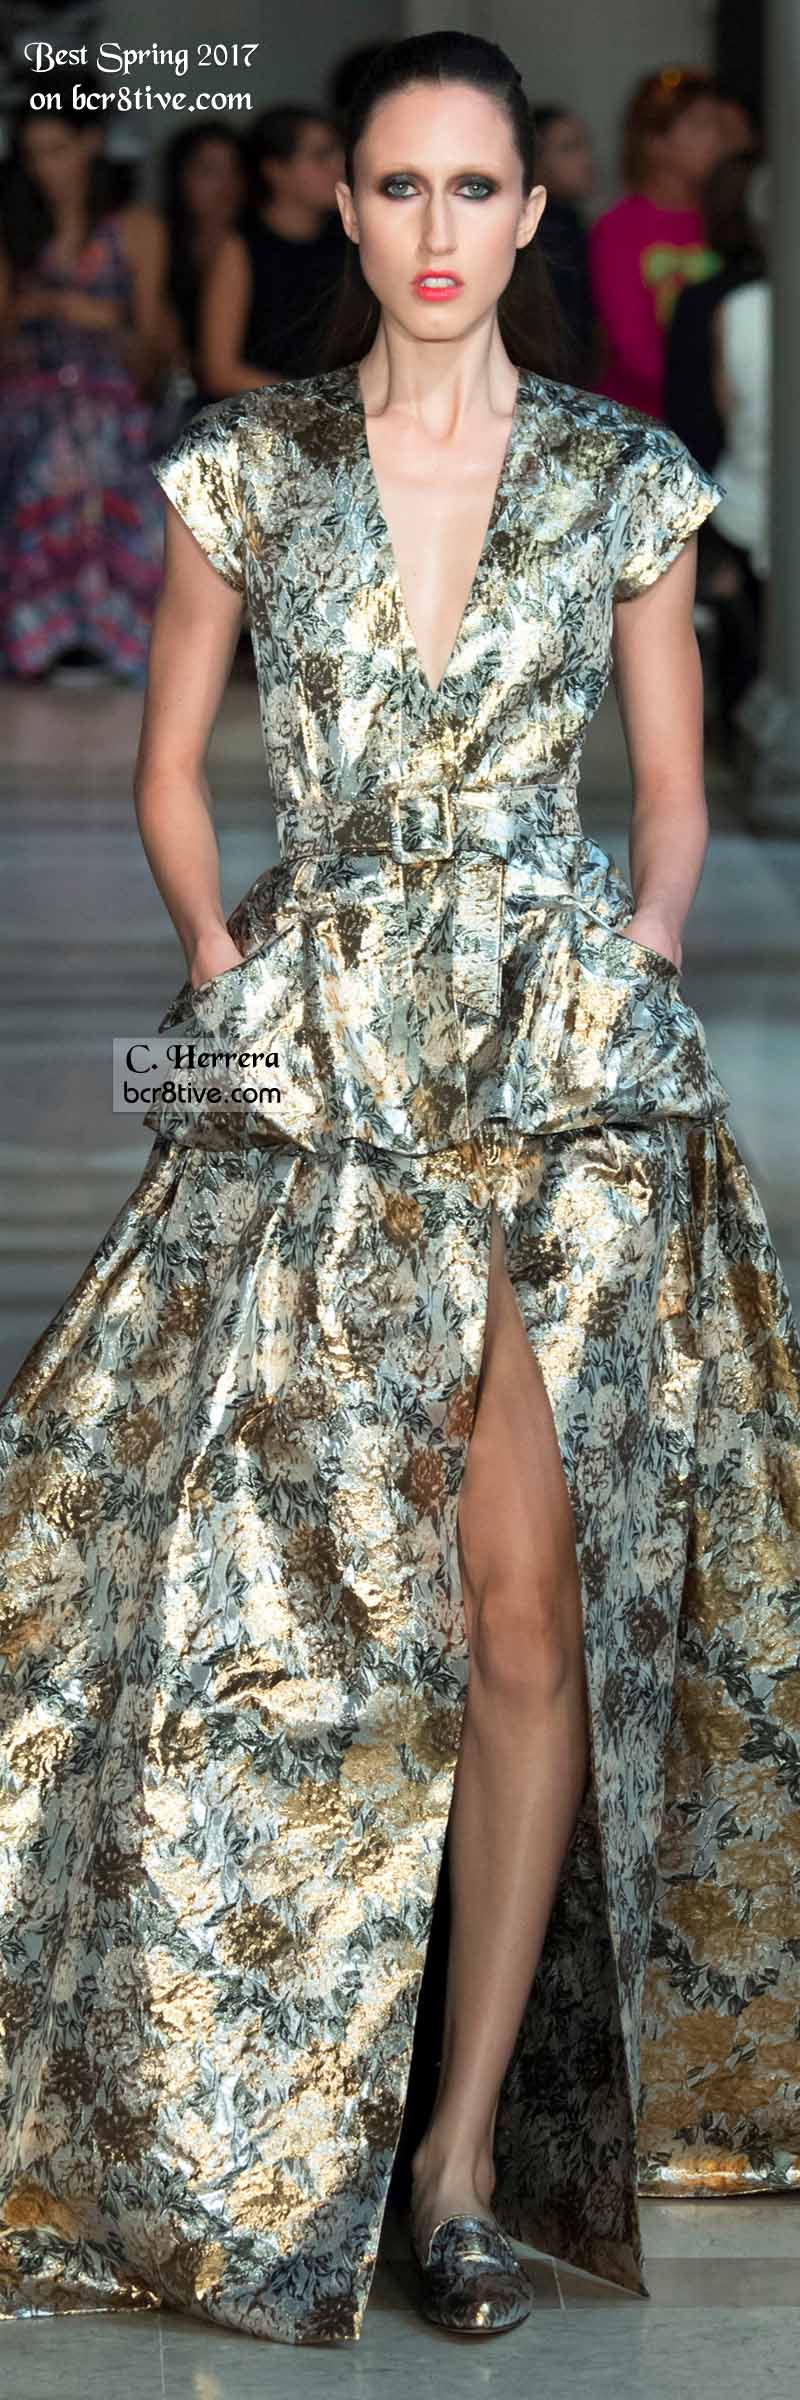 Carolina Herrera - The Best Looks from New York Fashion Week Spring 2017